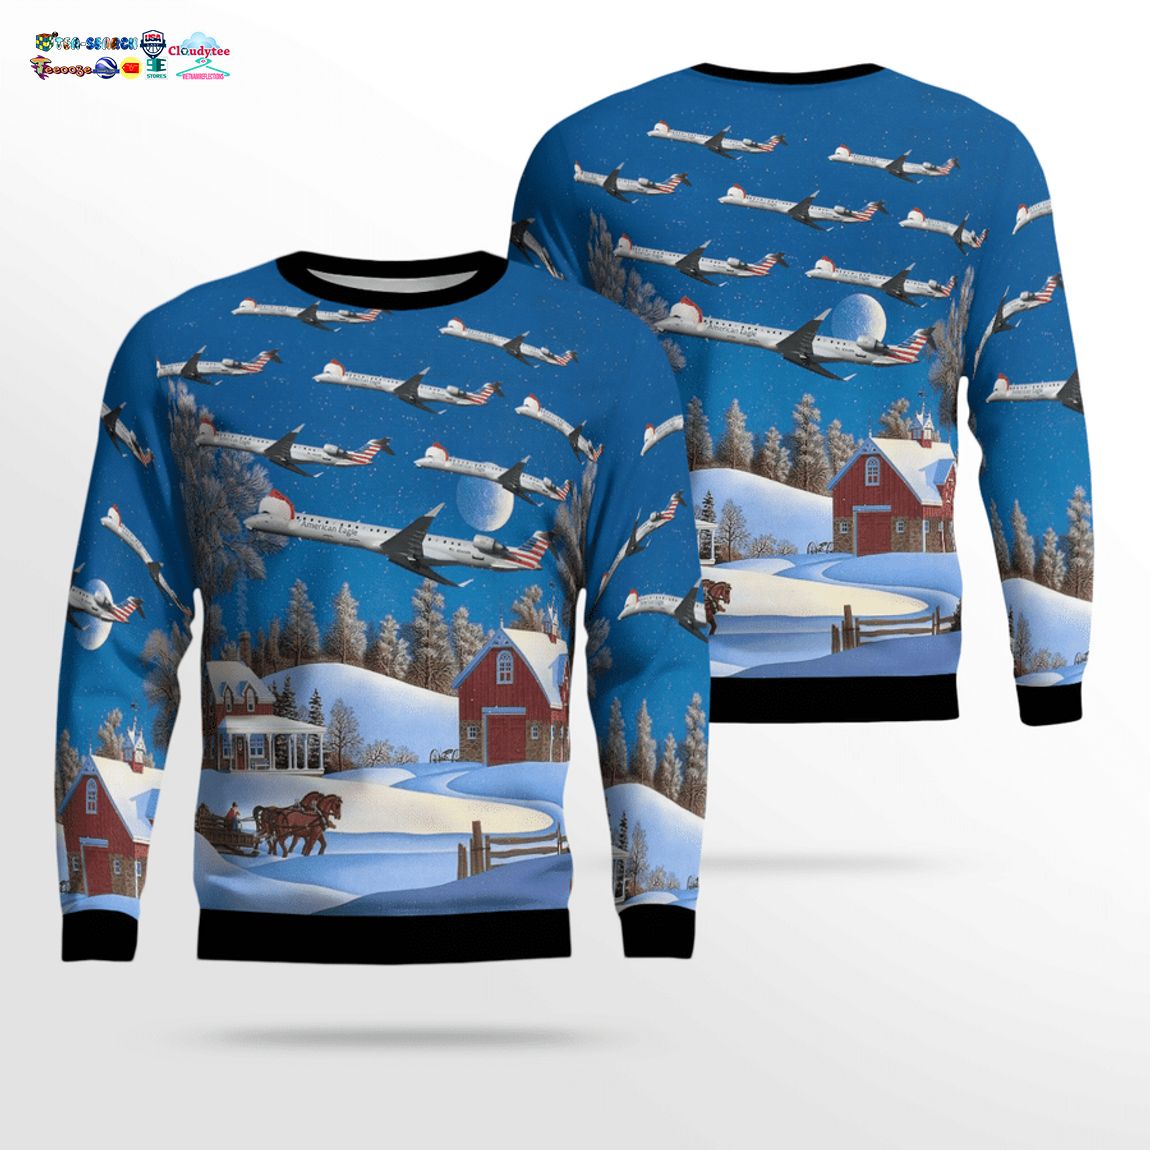 PSA Airlines Bombardier CRJ900 3D Christmas Sweater - Gang of rockstars